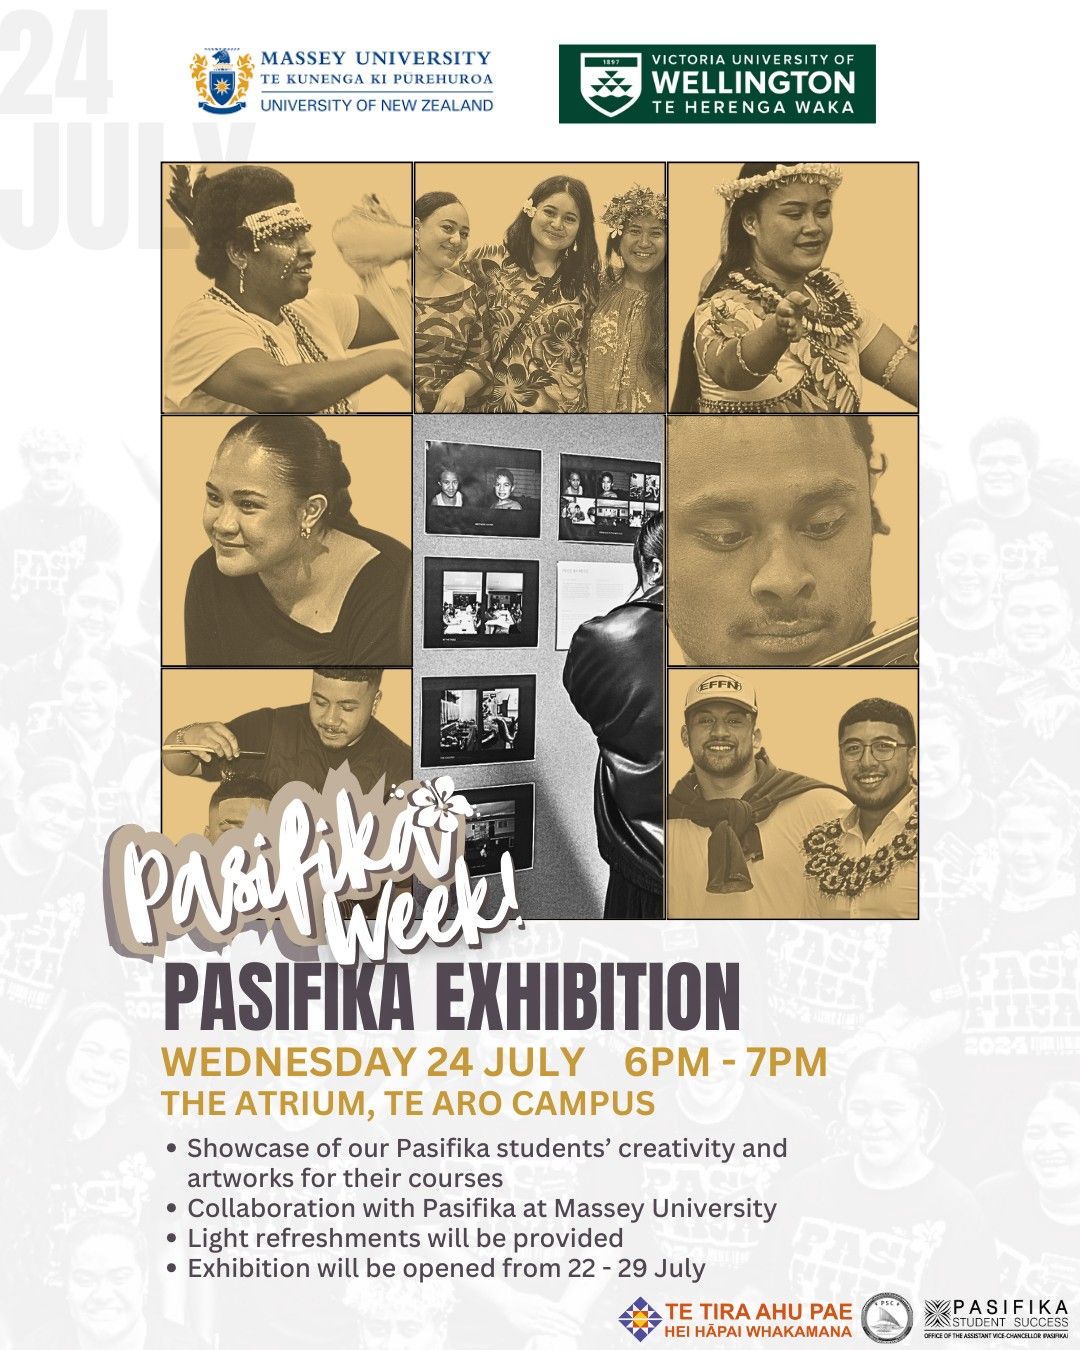 Pasifika Exhibition | Victoria University x Massey University collab